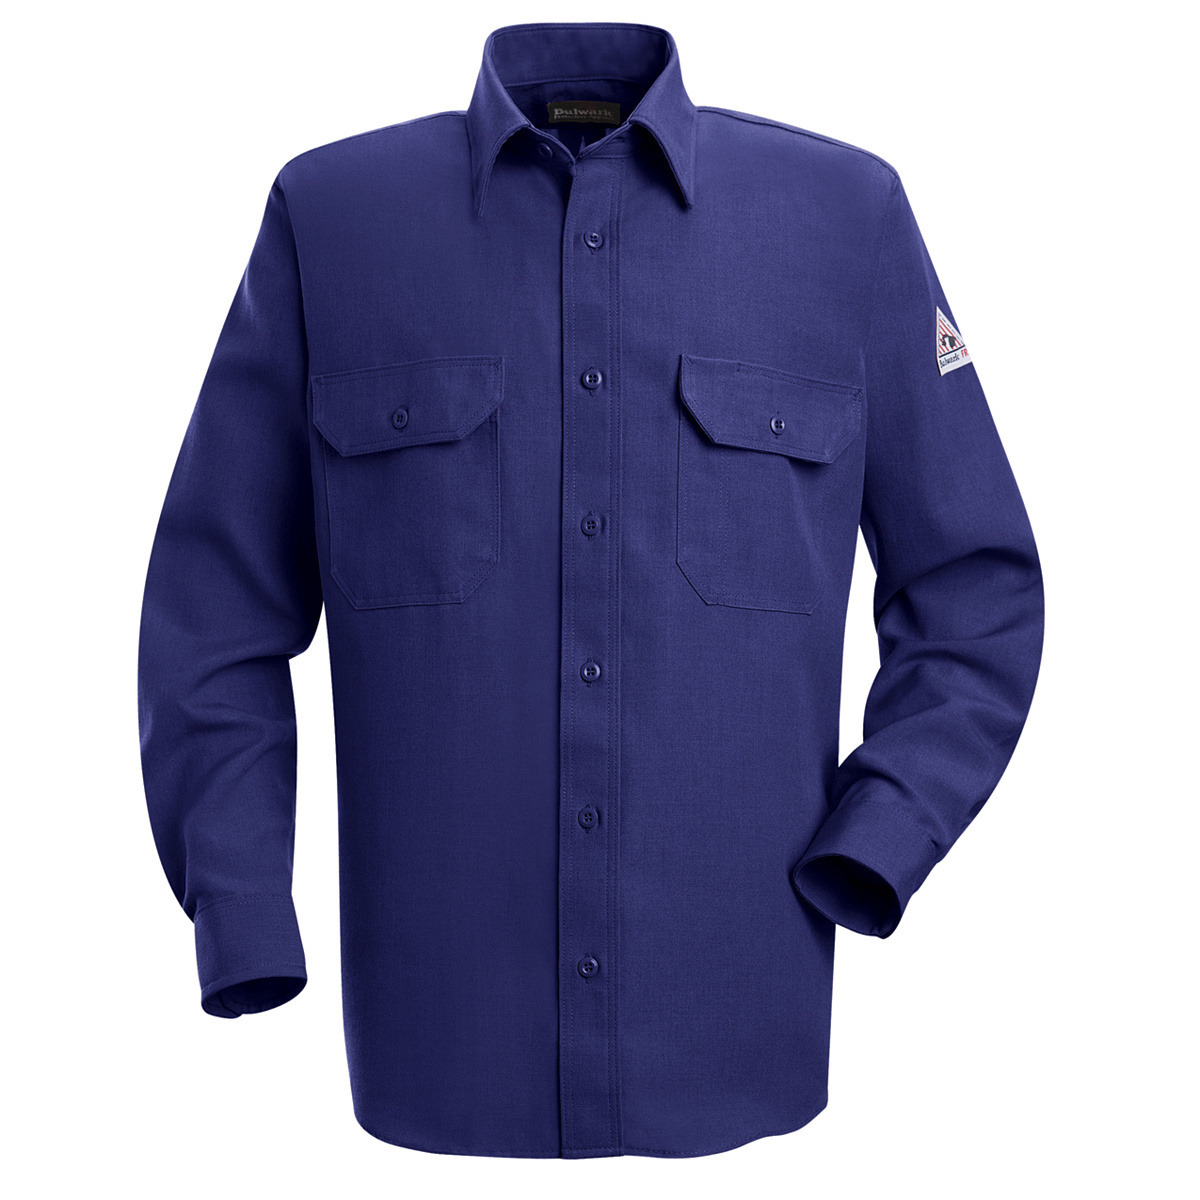 Bulwark® Small| Regular Royal Blue Nomex® IIIA/Nomex® Aramid/Kevlar® Aramid Flame Resistant Uniform Shirt With Button Front Clos